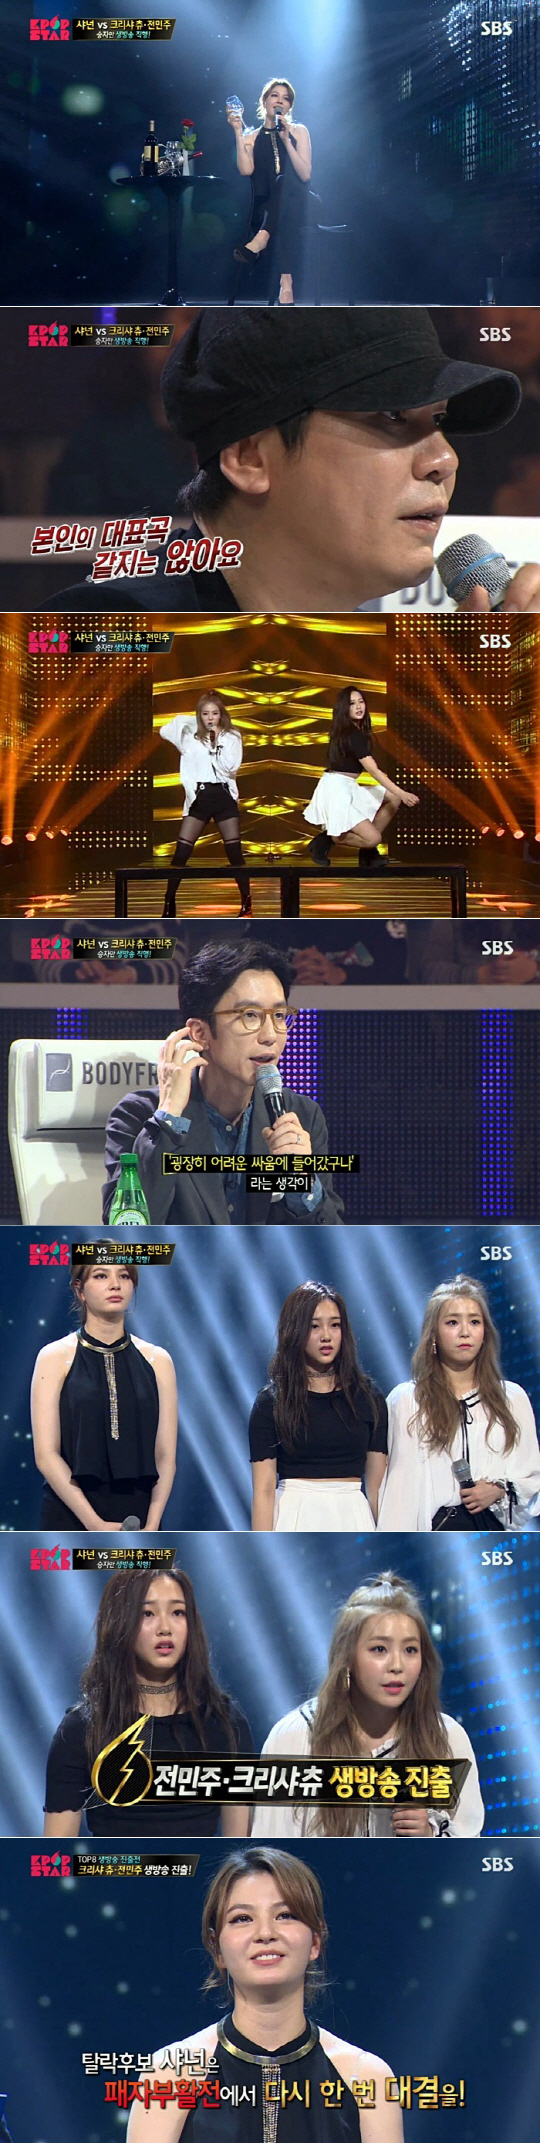 SBS ‘K팝스타6’ 방송화면